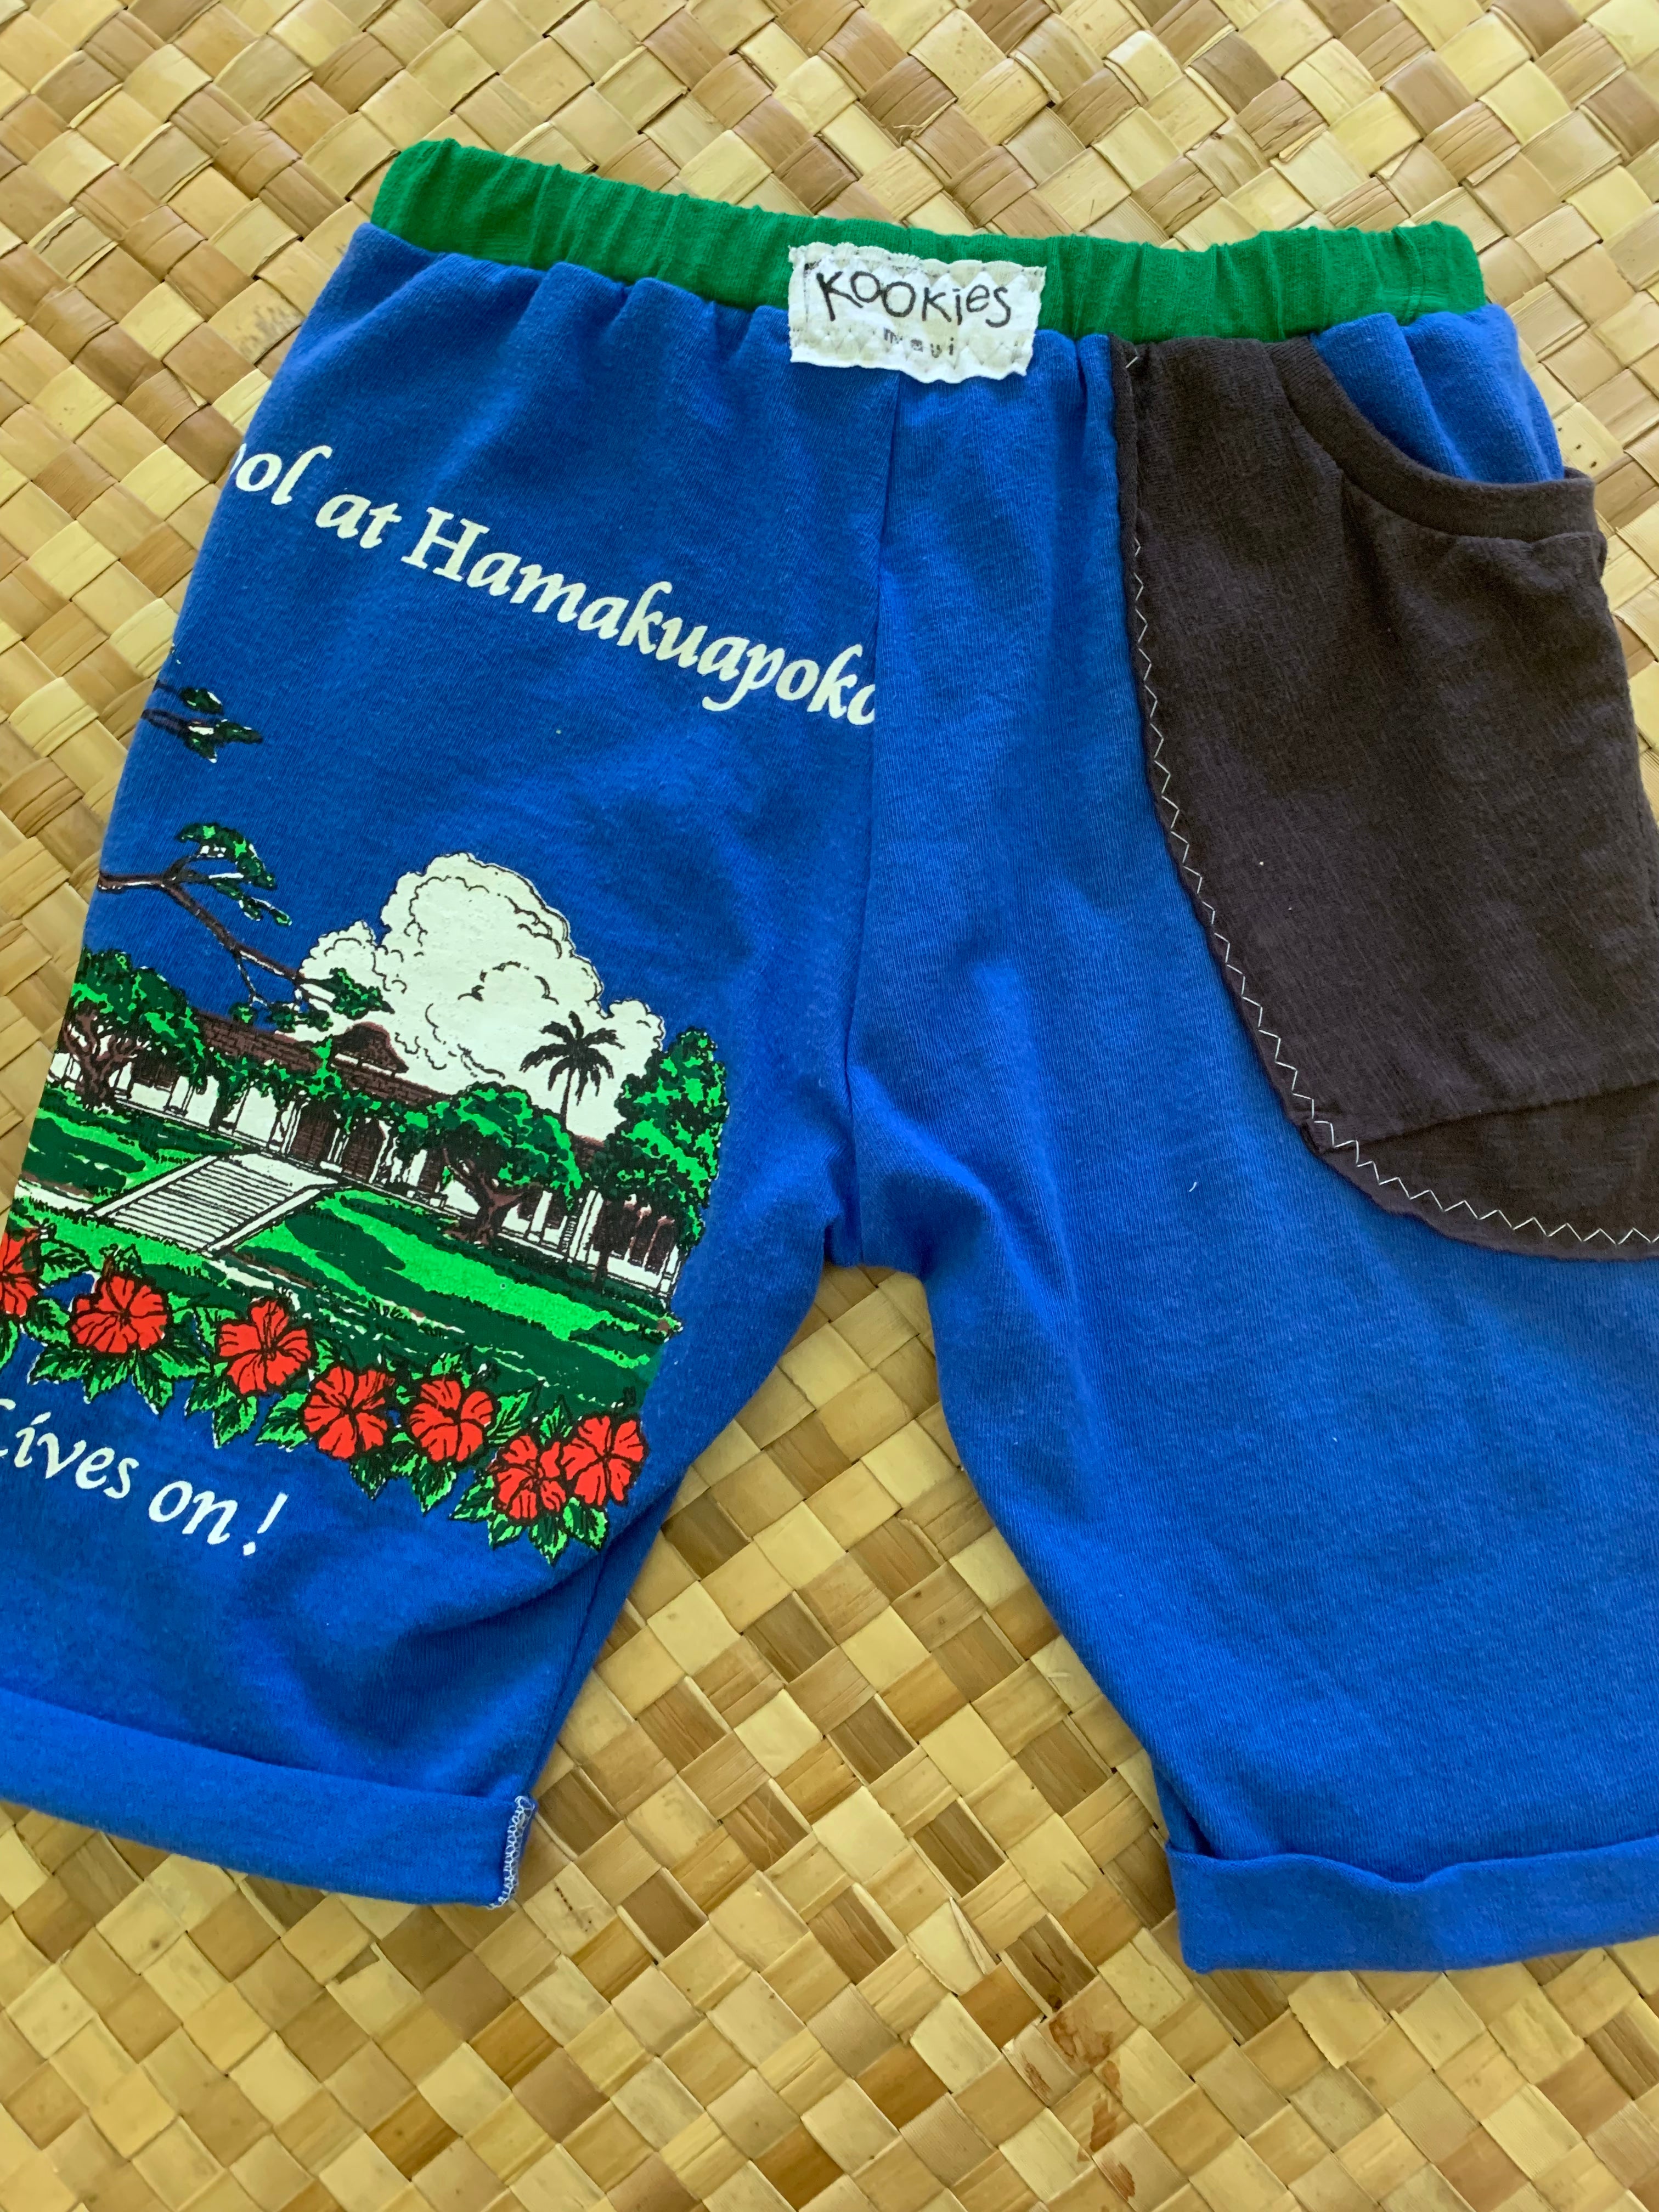 Kids Size 6 "Blue & Green Old Maui High" Beach Comber Shorts